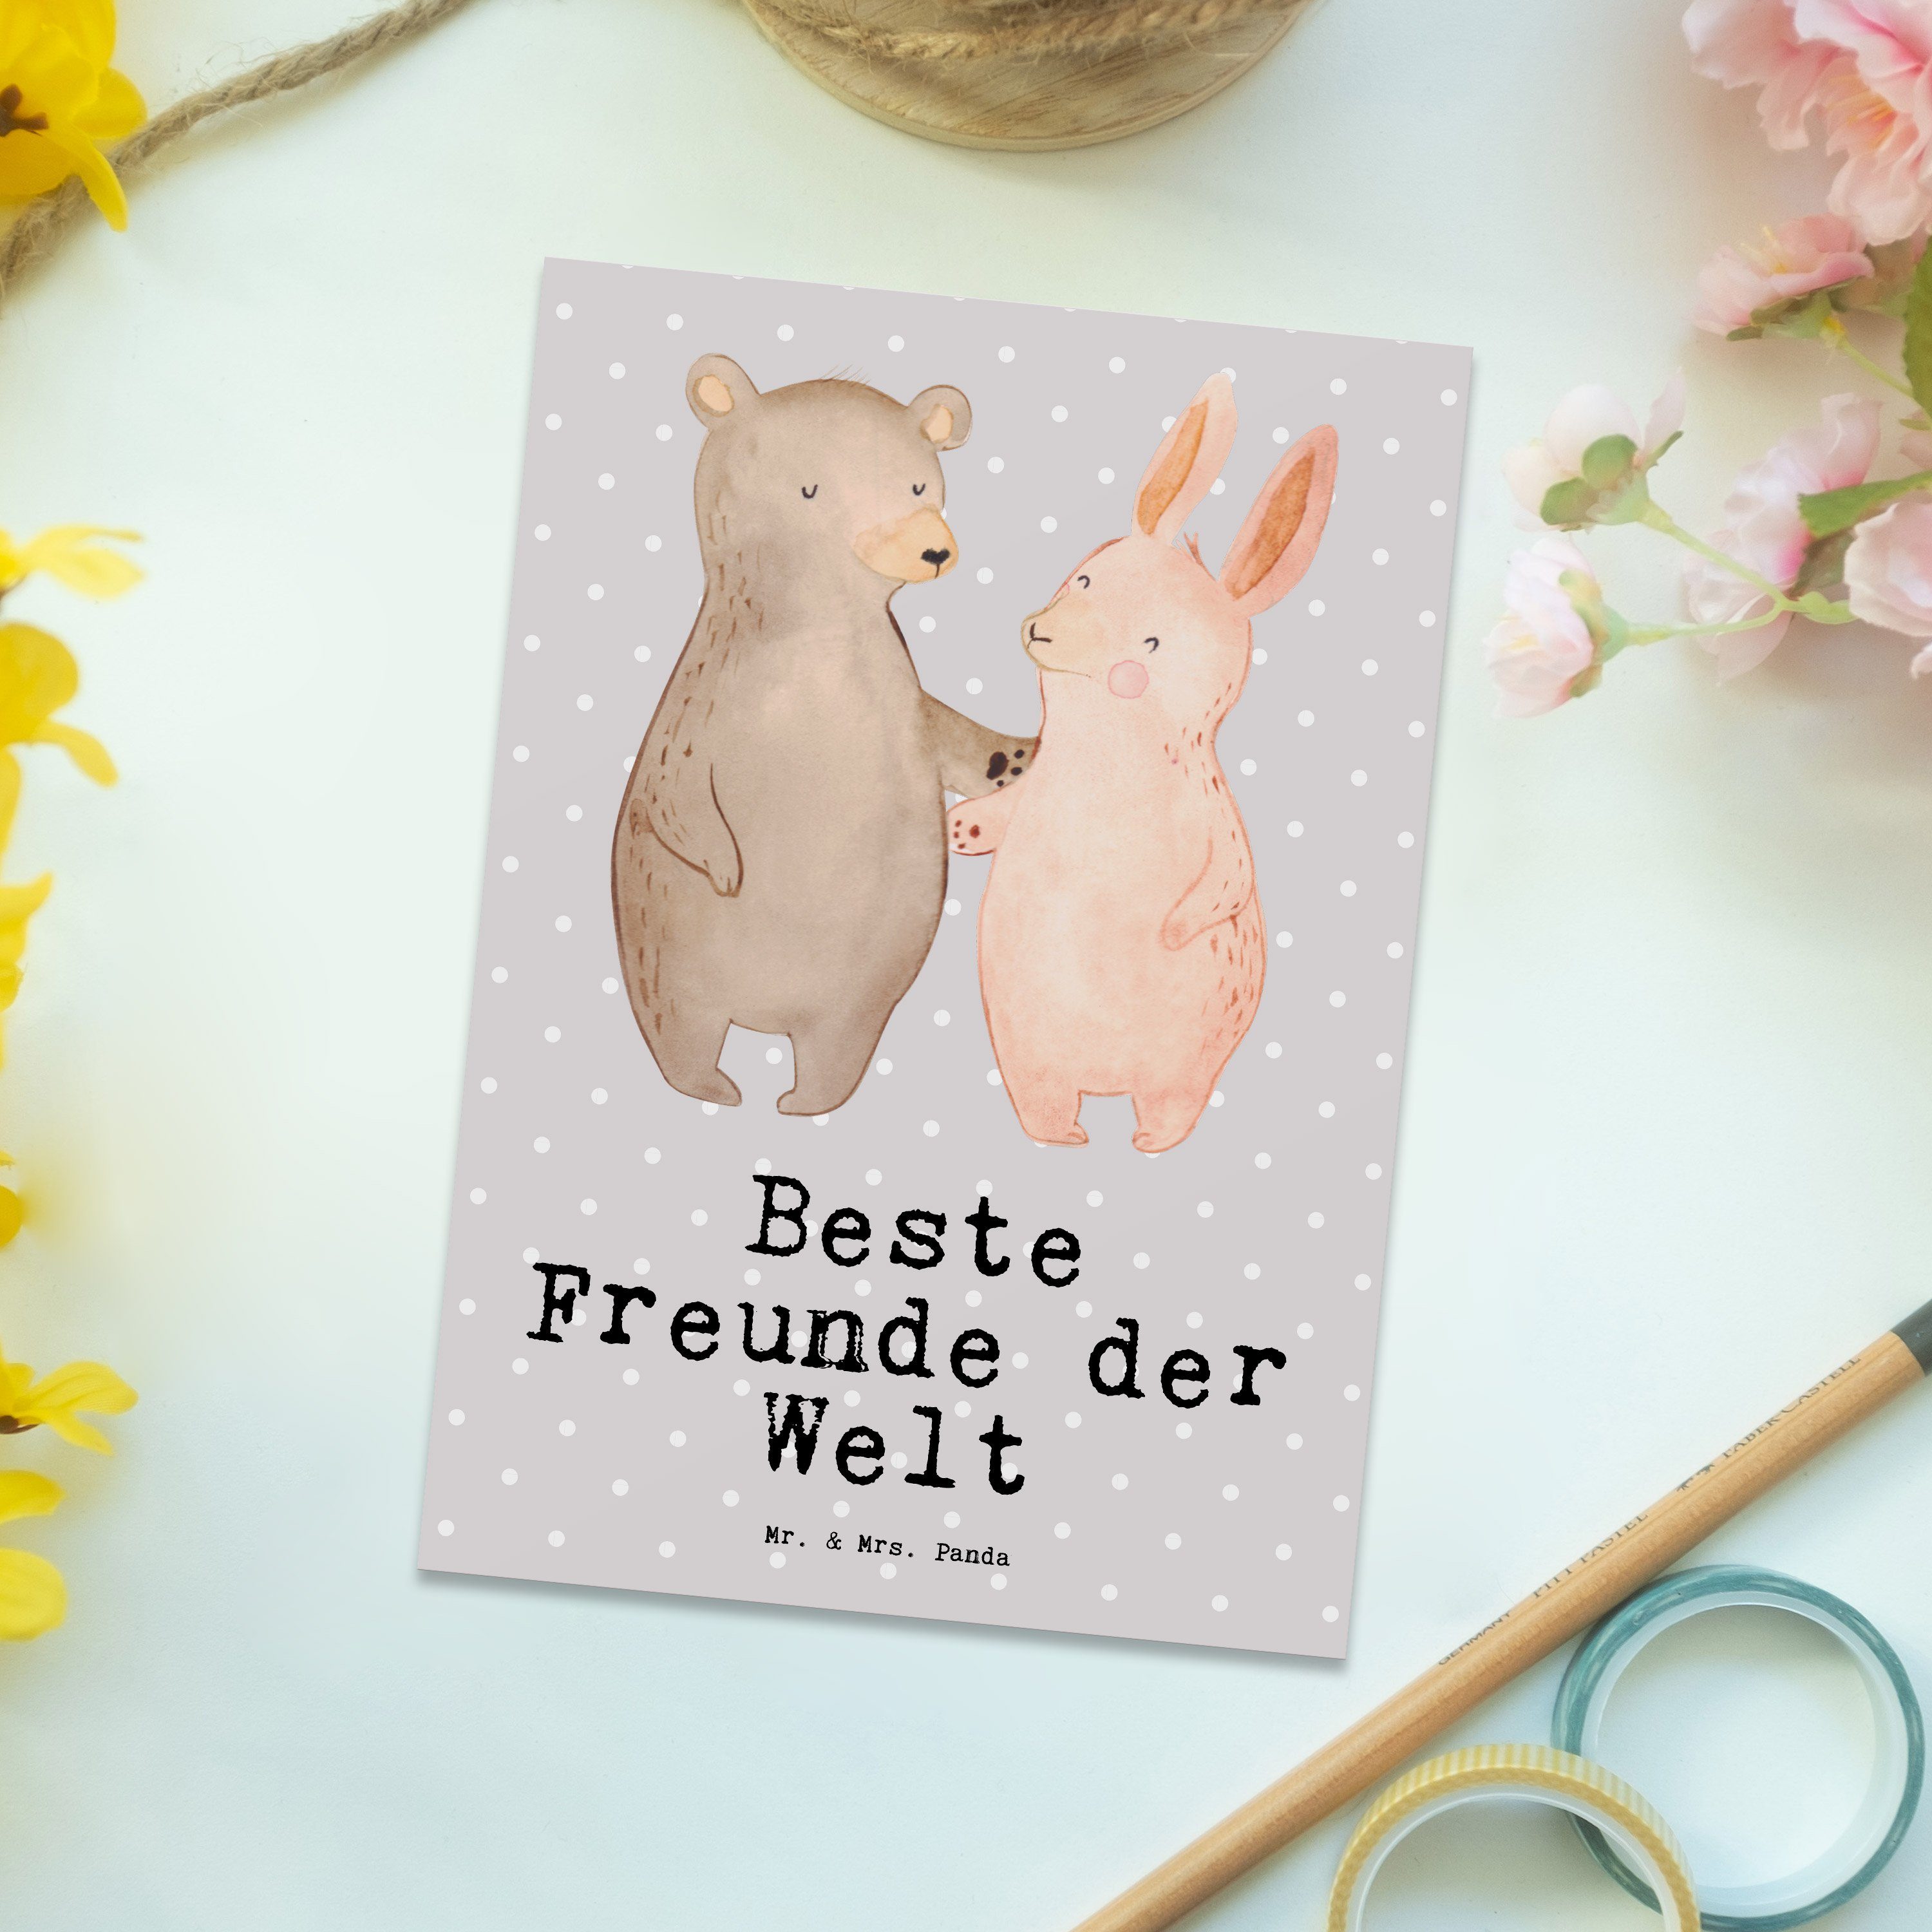 Mr. & Mrs. Panda Beste Freunde Pastell Hase Postkarte - der Grau friends Geschenk, best - Welt